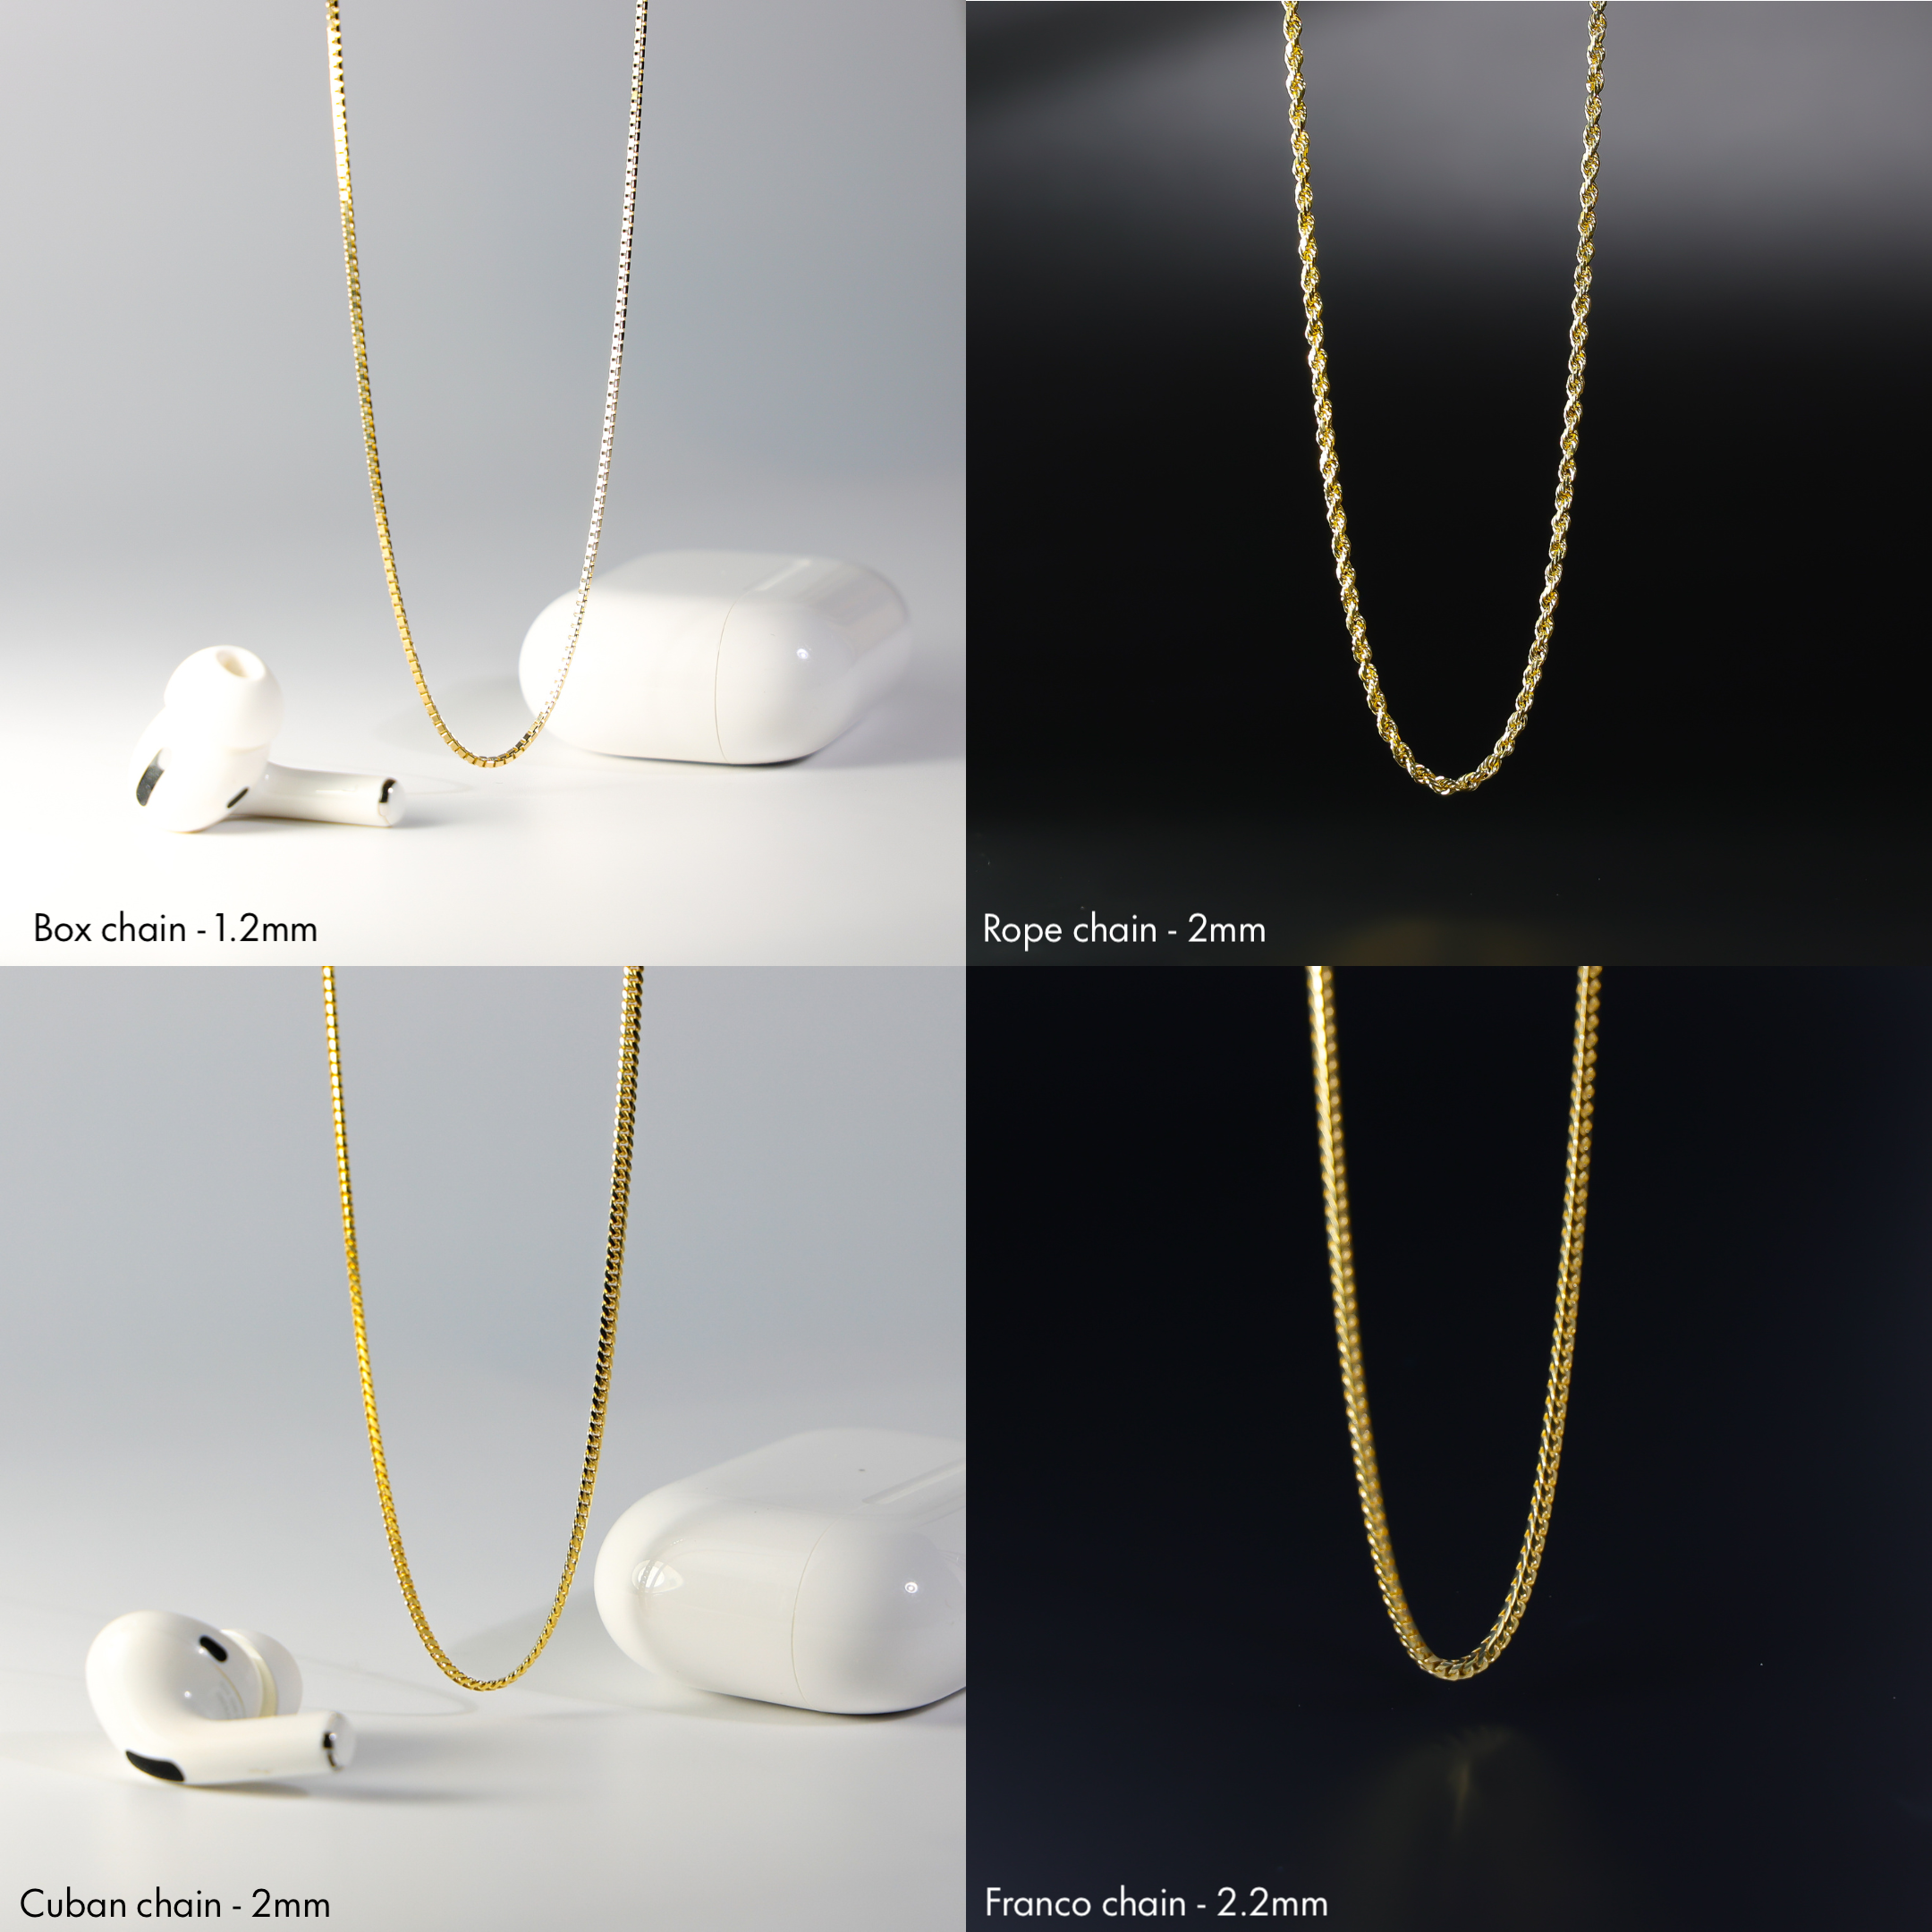 14K Gold Medium Polished Horse Necklace Pendant - Charlie & Co. Jewelry